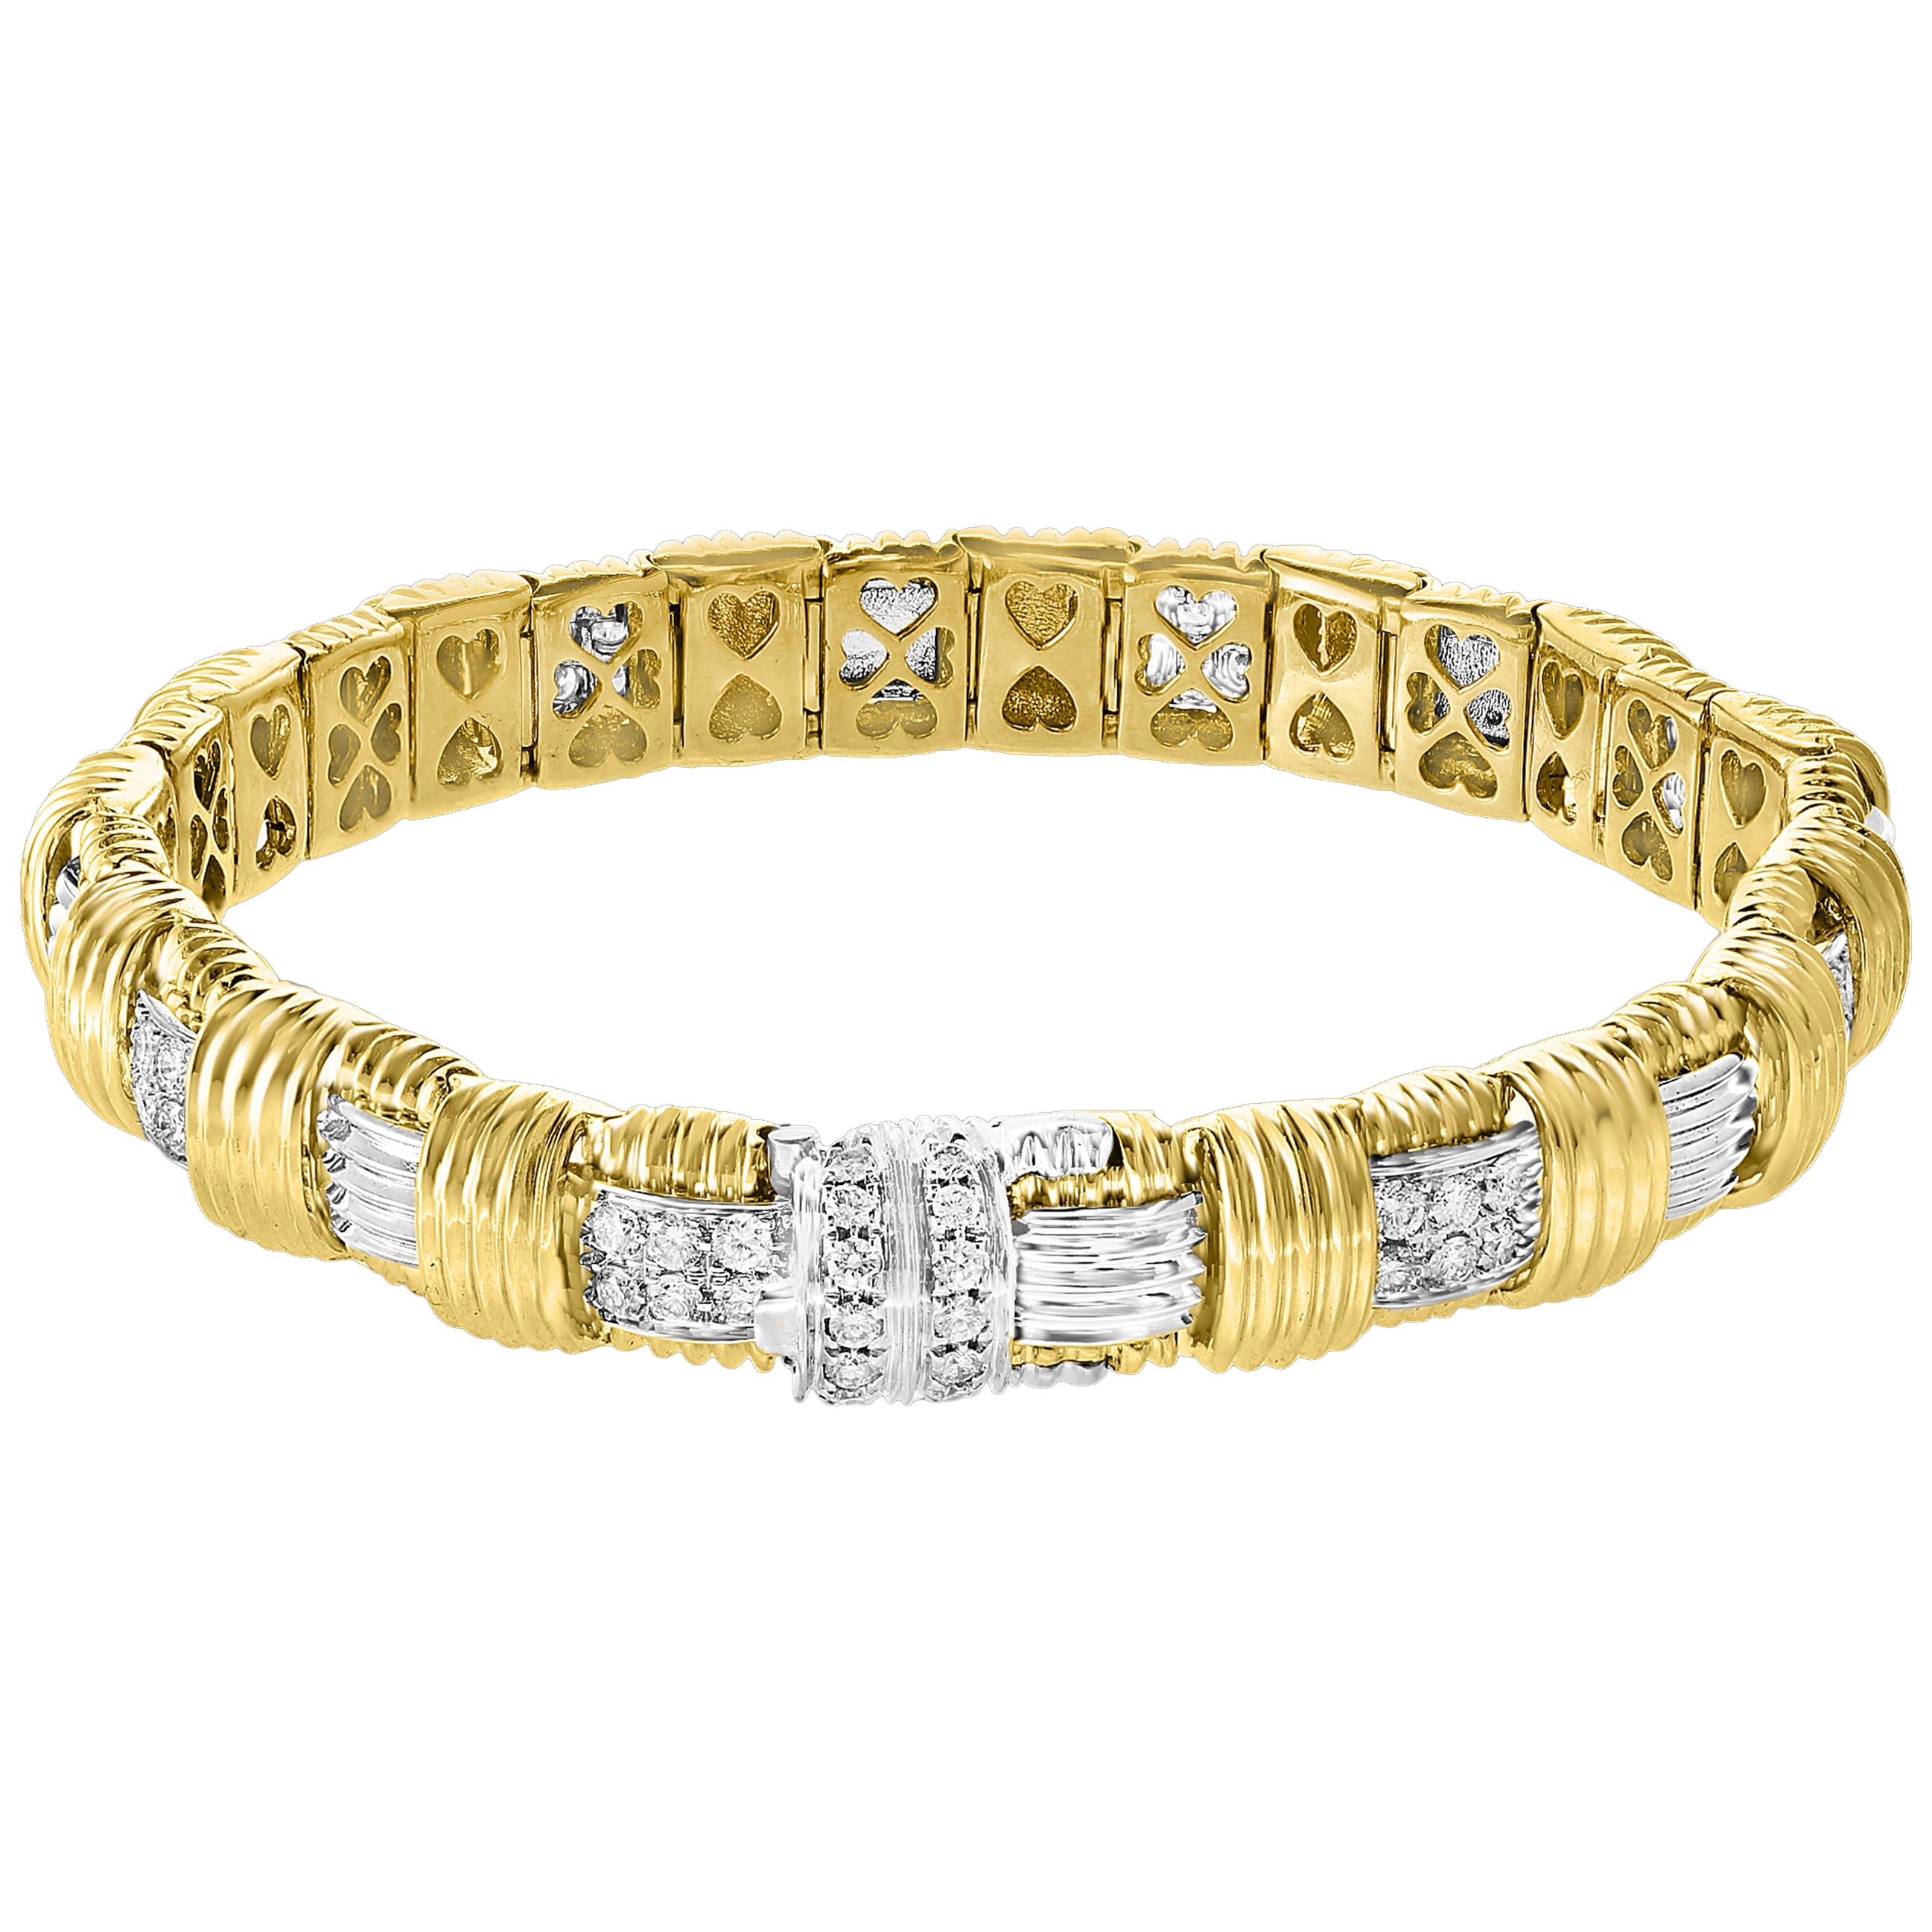 Roberto Coin Appassionata Three-Row Diamond Bracelet in 18 Karat Yellow Gold